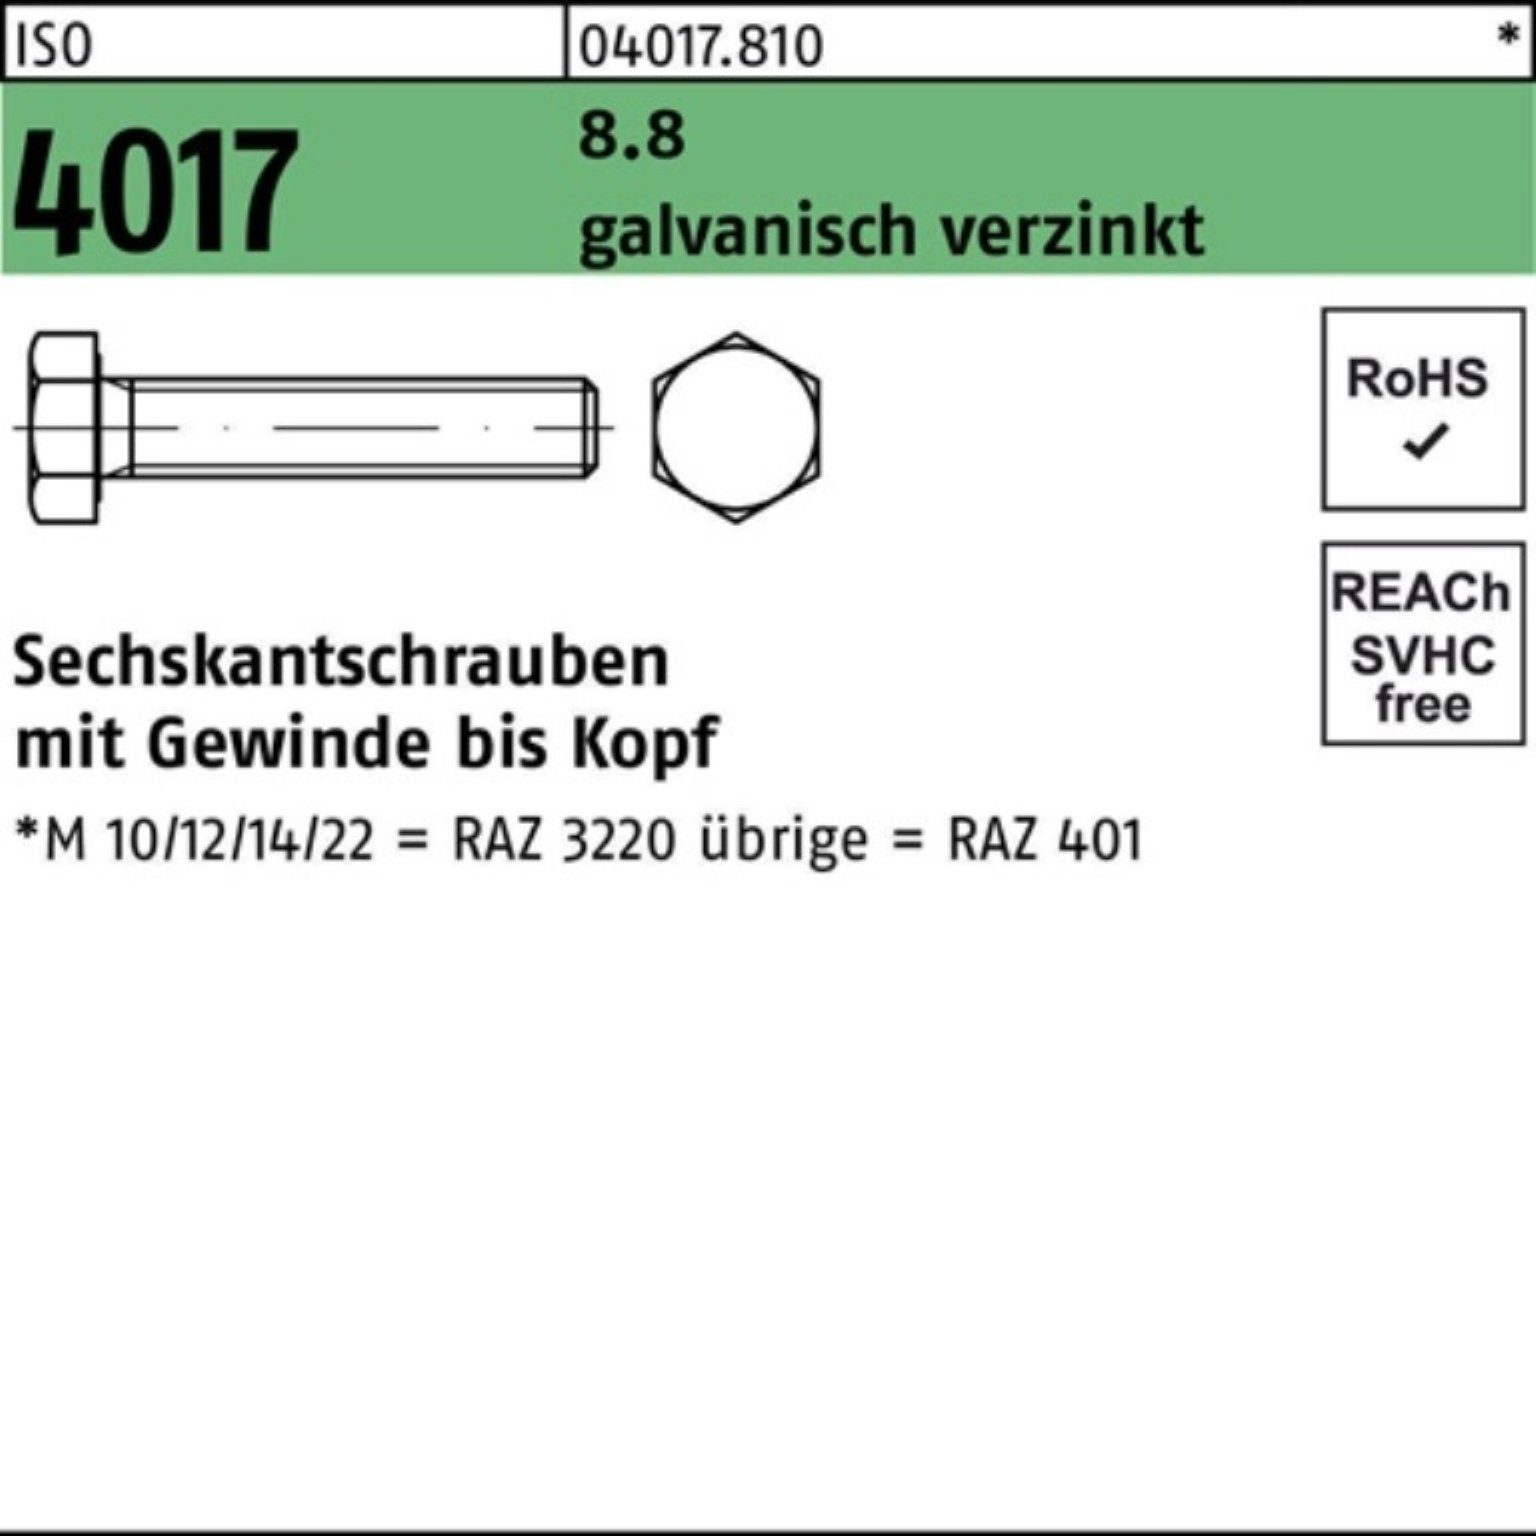 Sechskantschraube 100er M30x St Bufab ISO 1 galv.verz. Sechskantschraube 8.8 110 4017 VG Pack